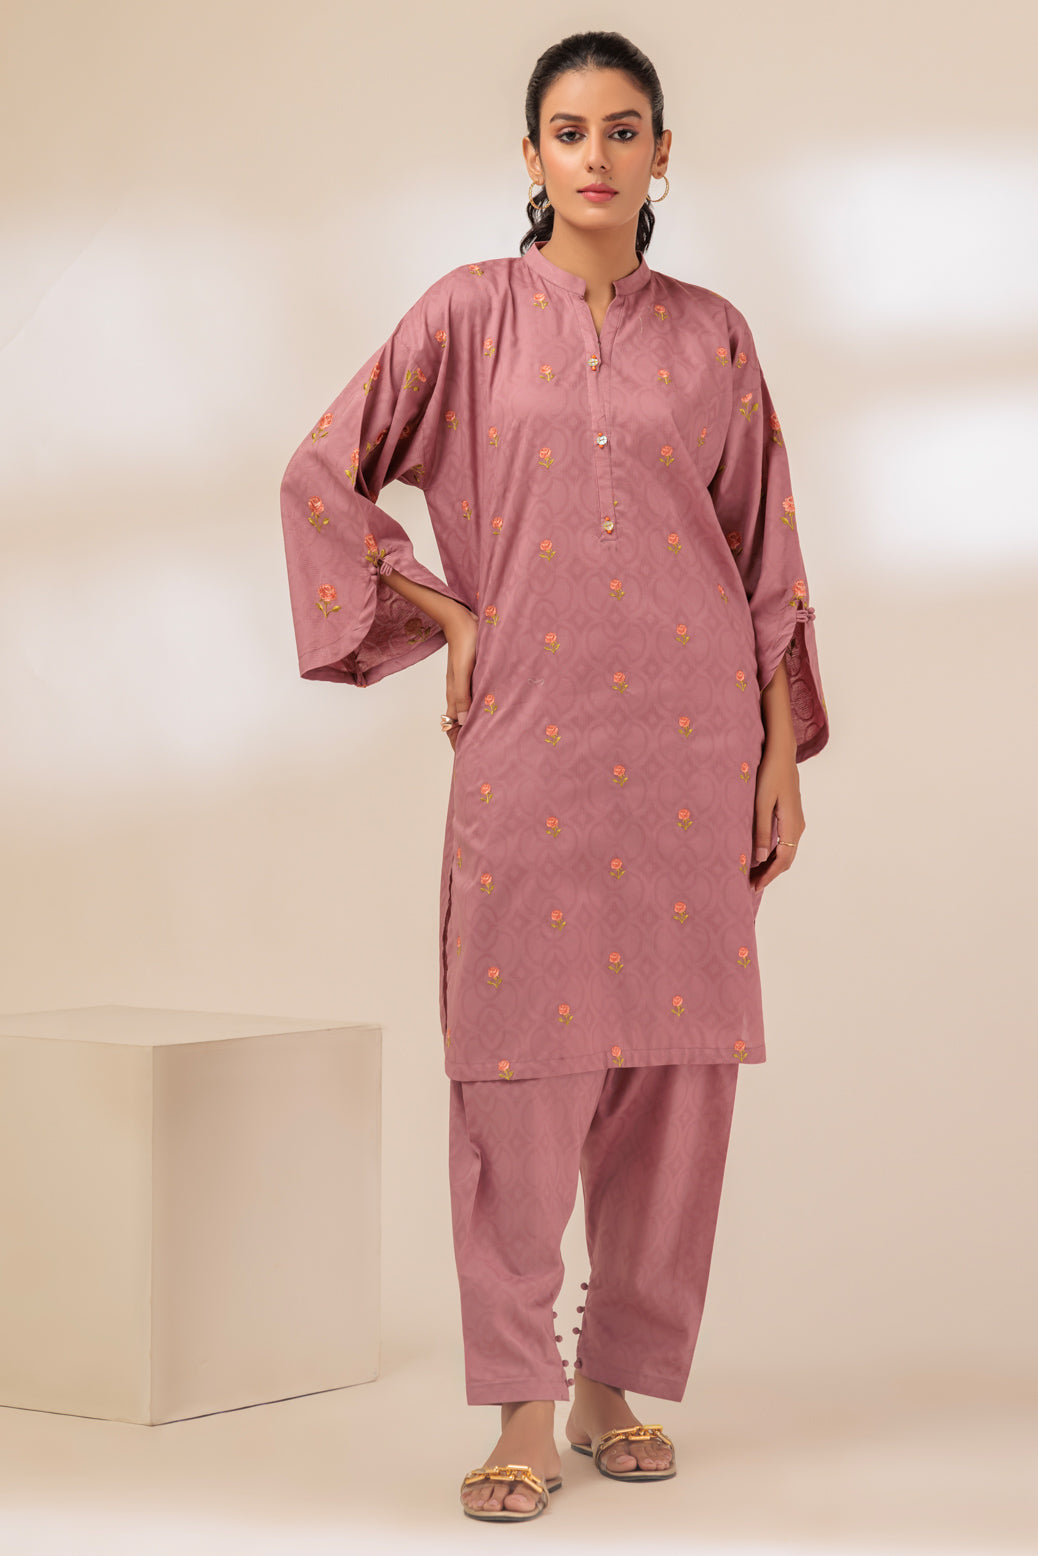 Jacquard Tea Pink 2 Piece Stitched Suit - Bonanza